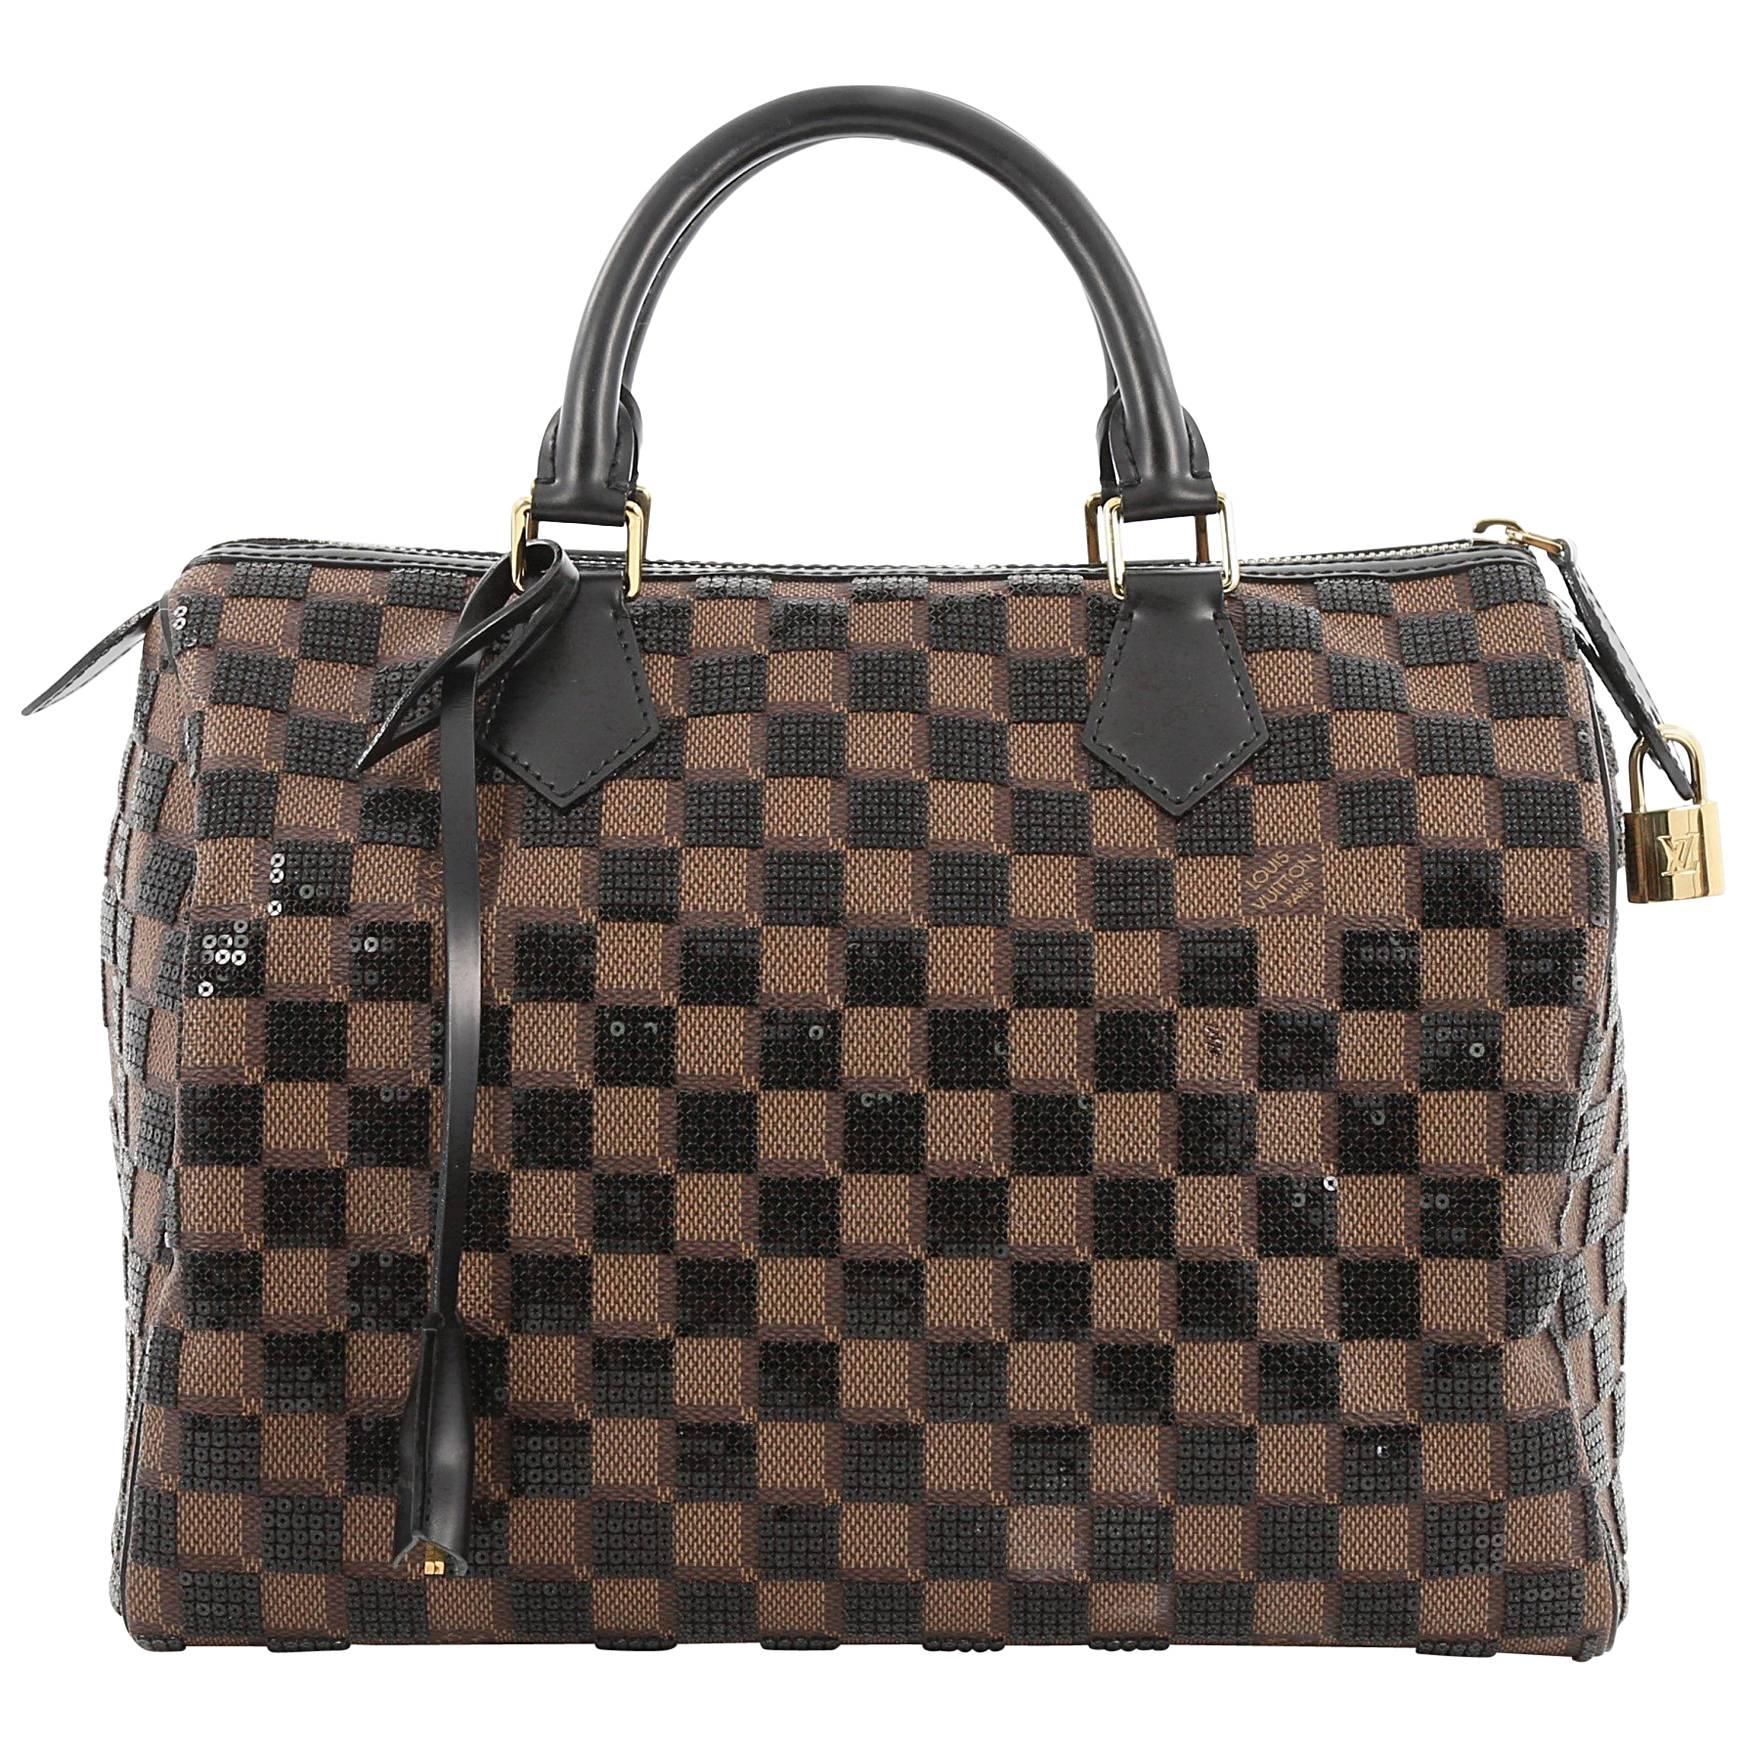 Louis Vuitton Speedy Handbag Damier Paillettes 30